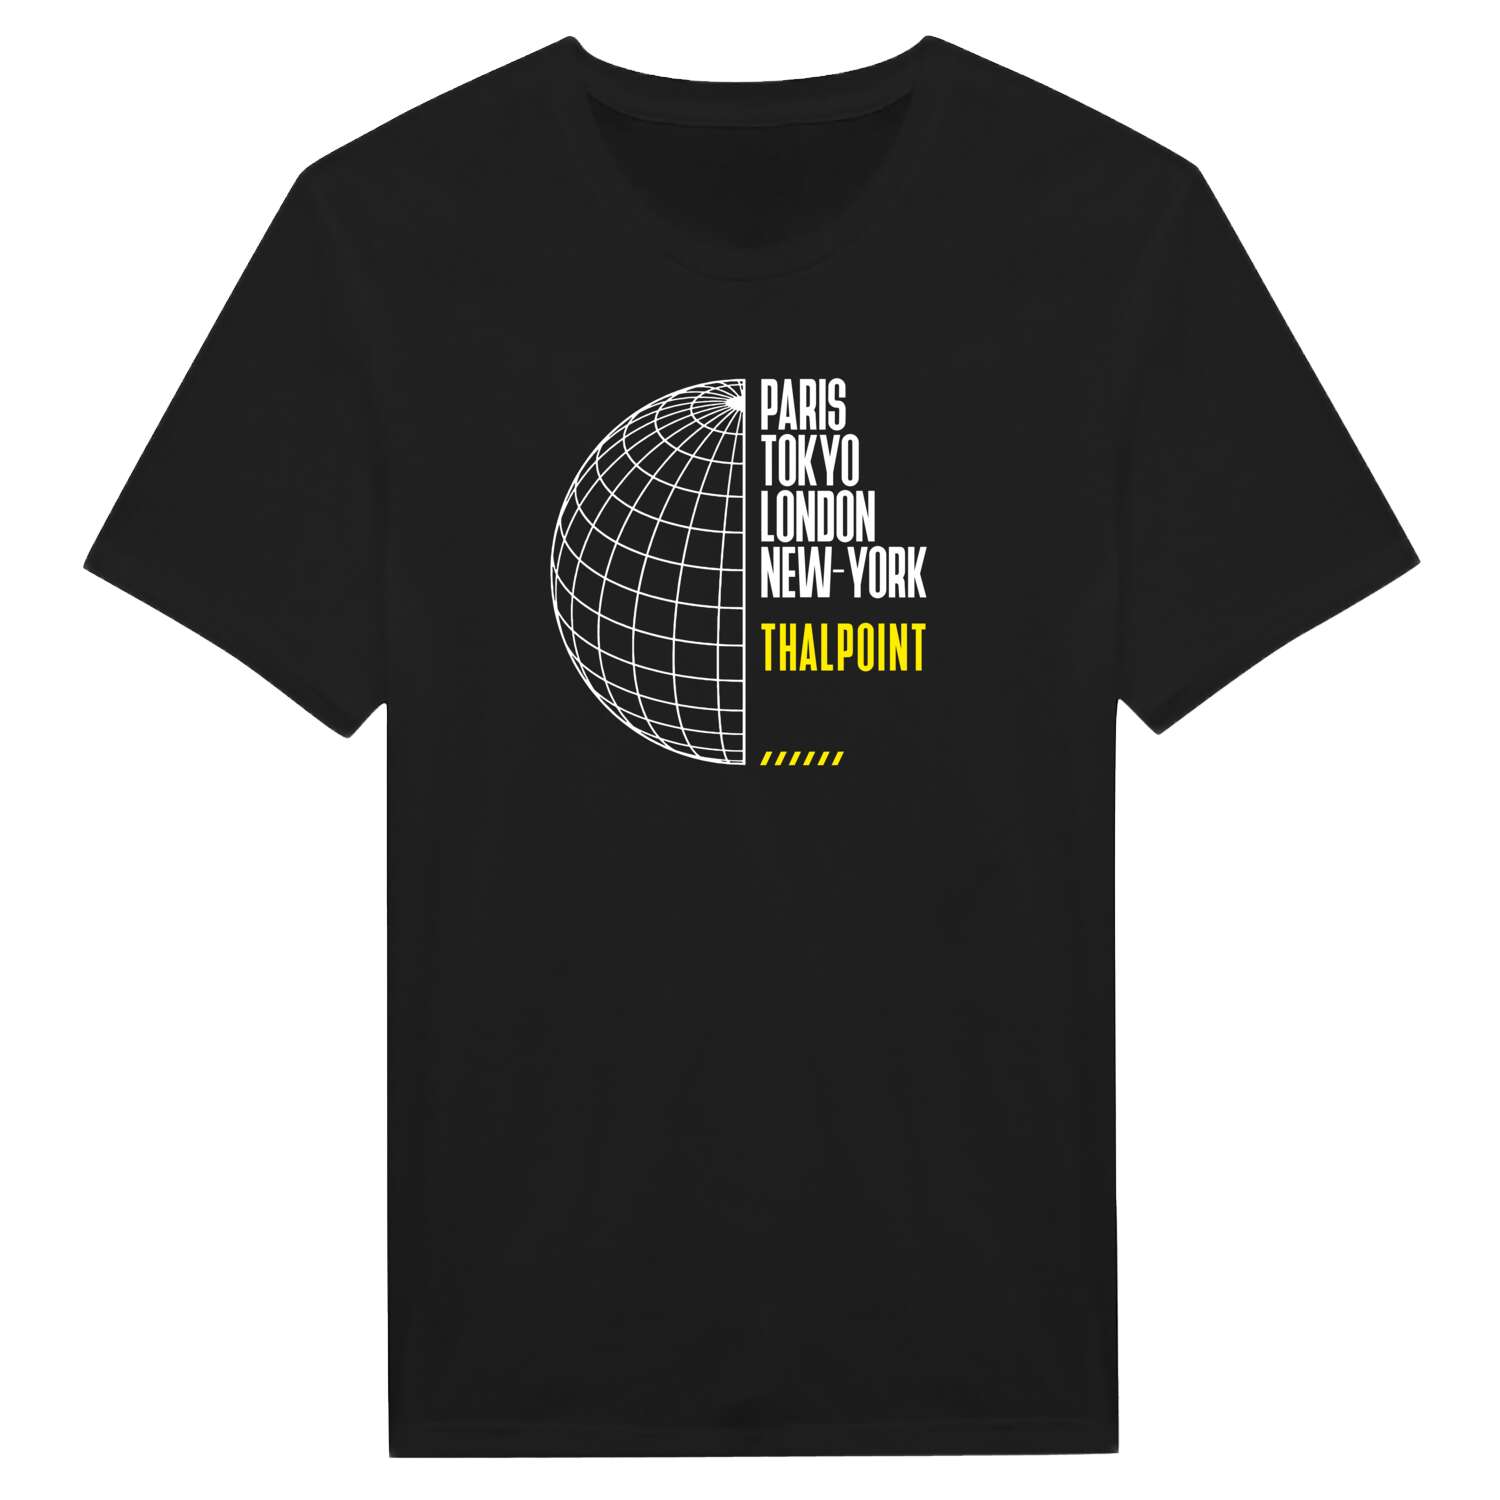 Thalpoint T-Shirt »Paris Tokyo London«